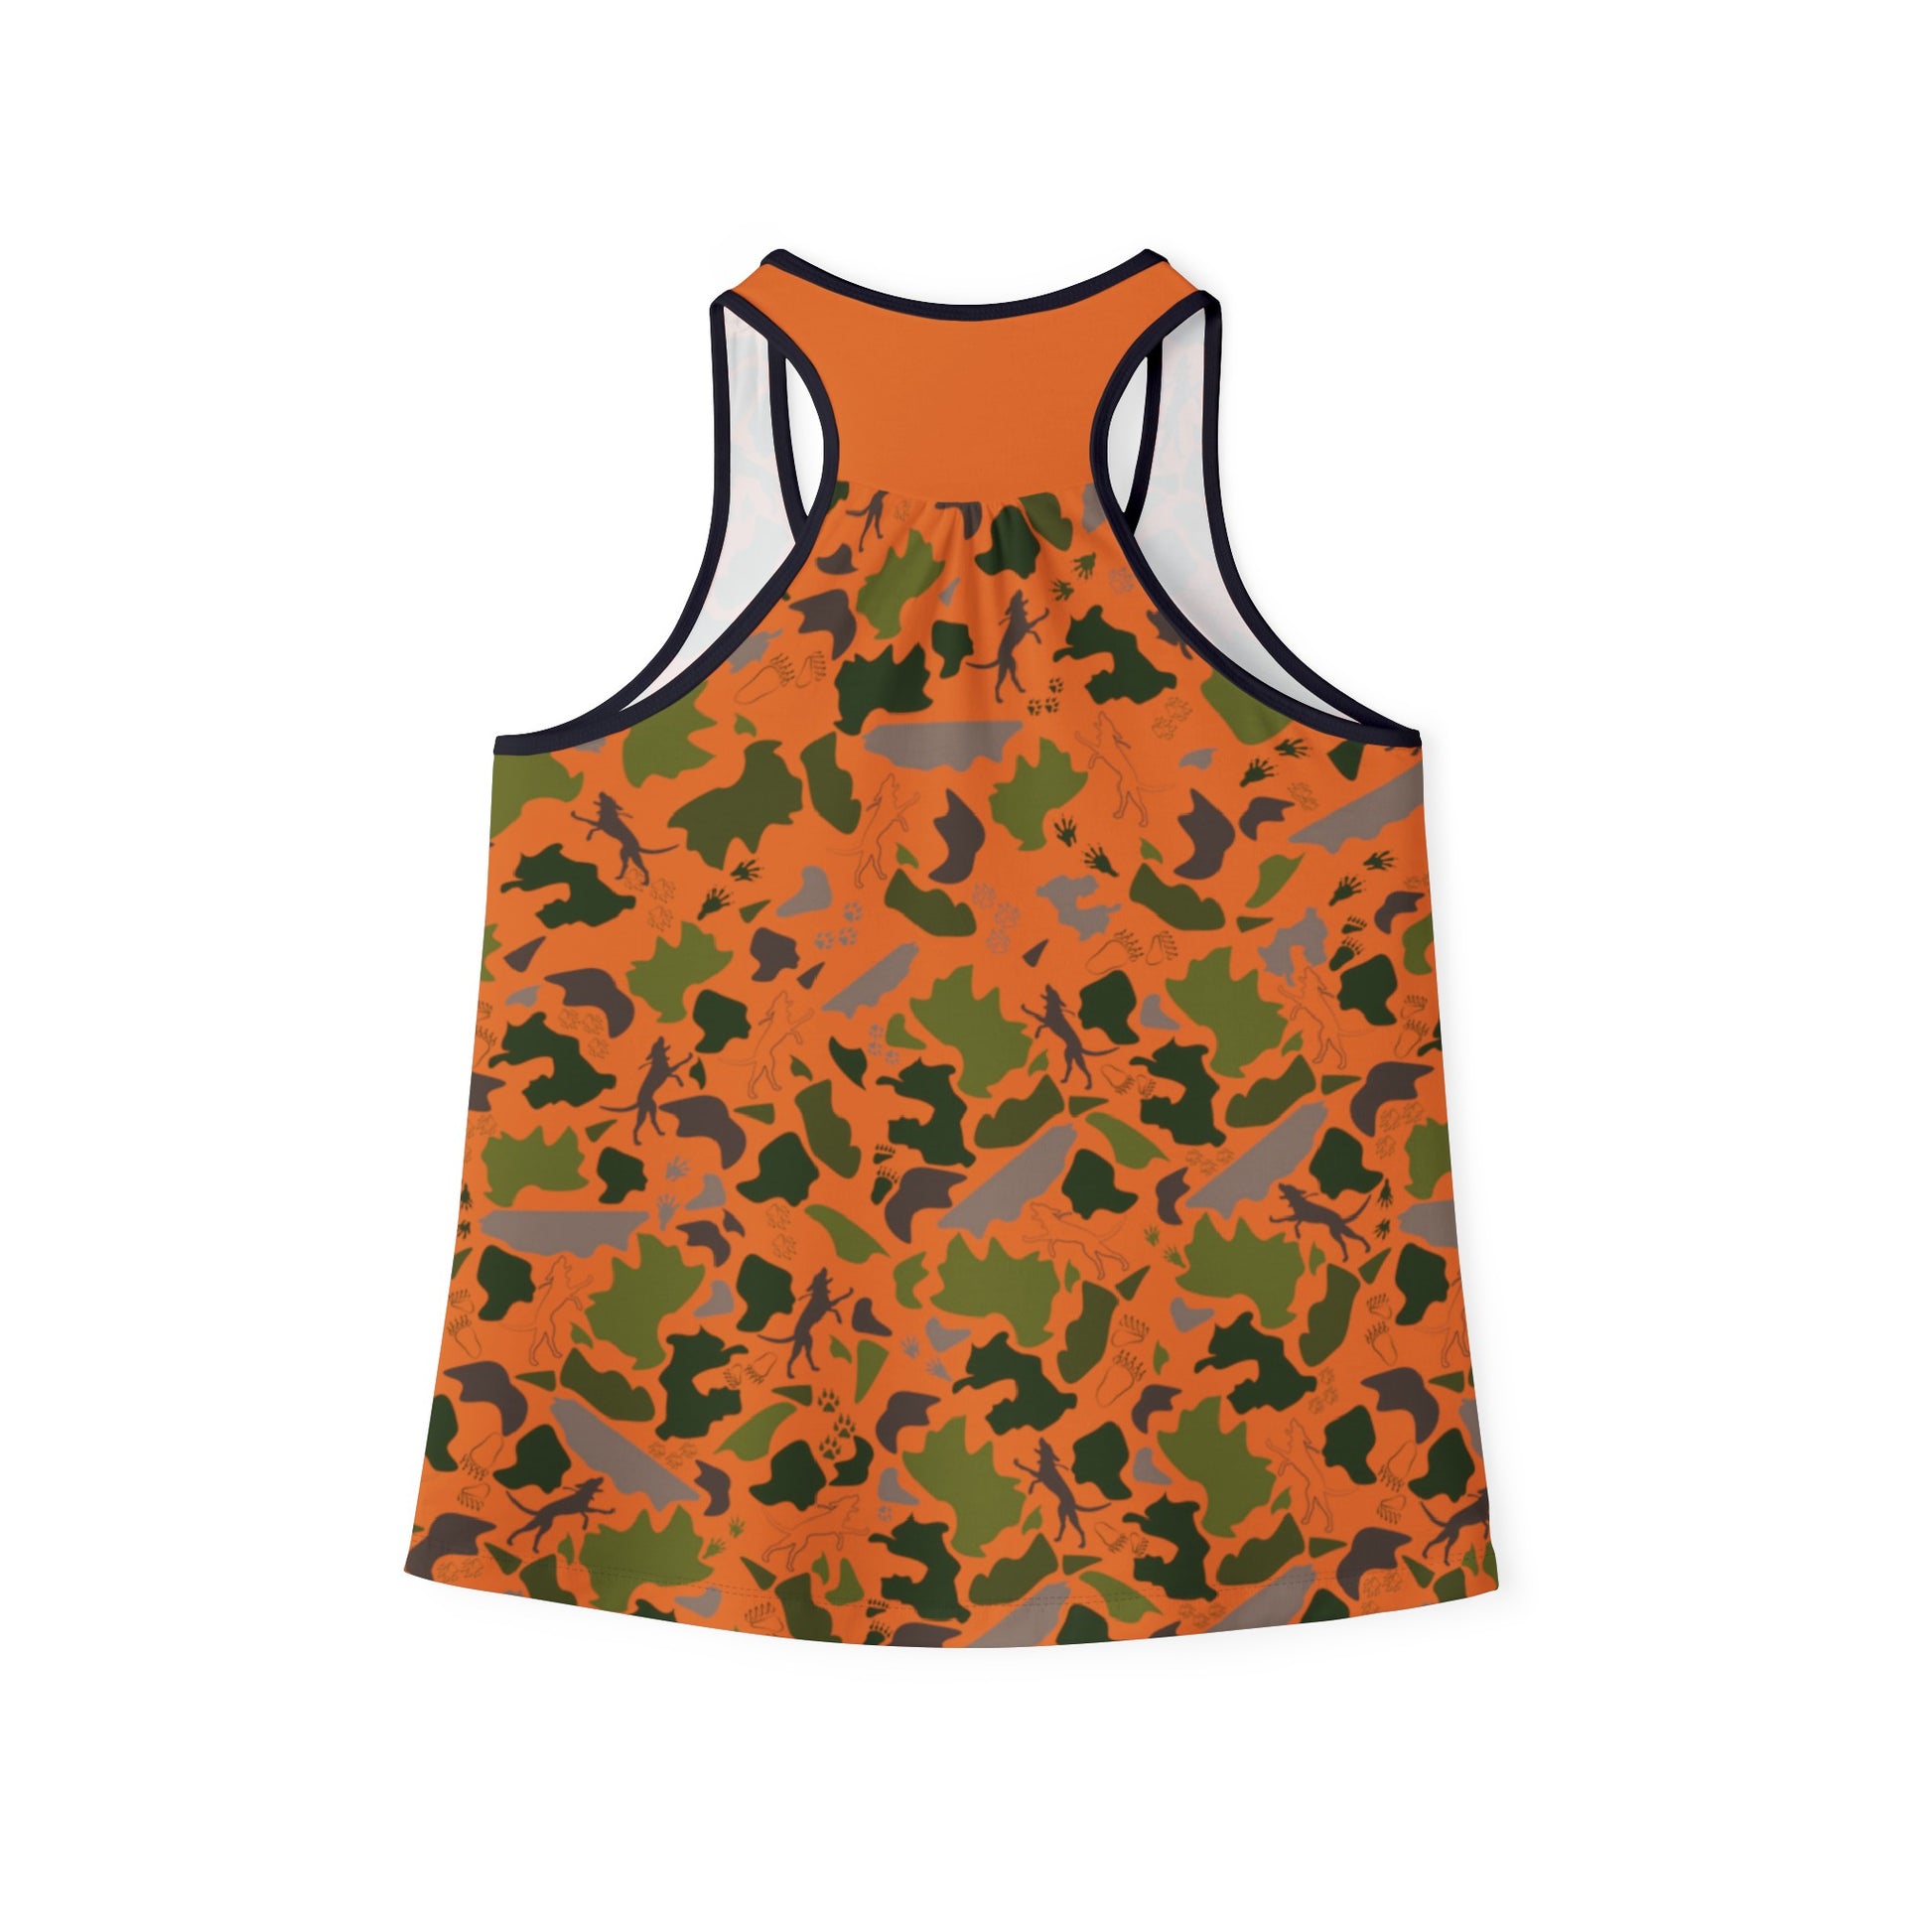 Stonewall828 original camouflage in orange